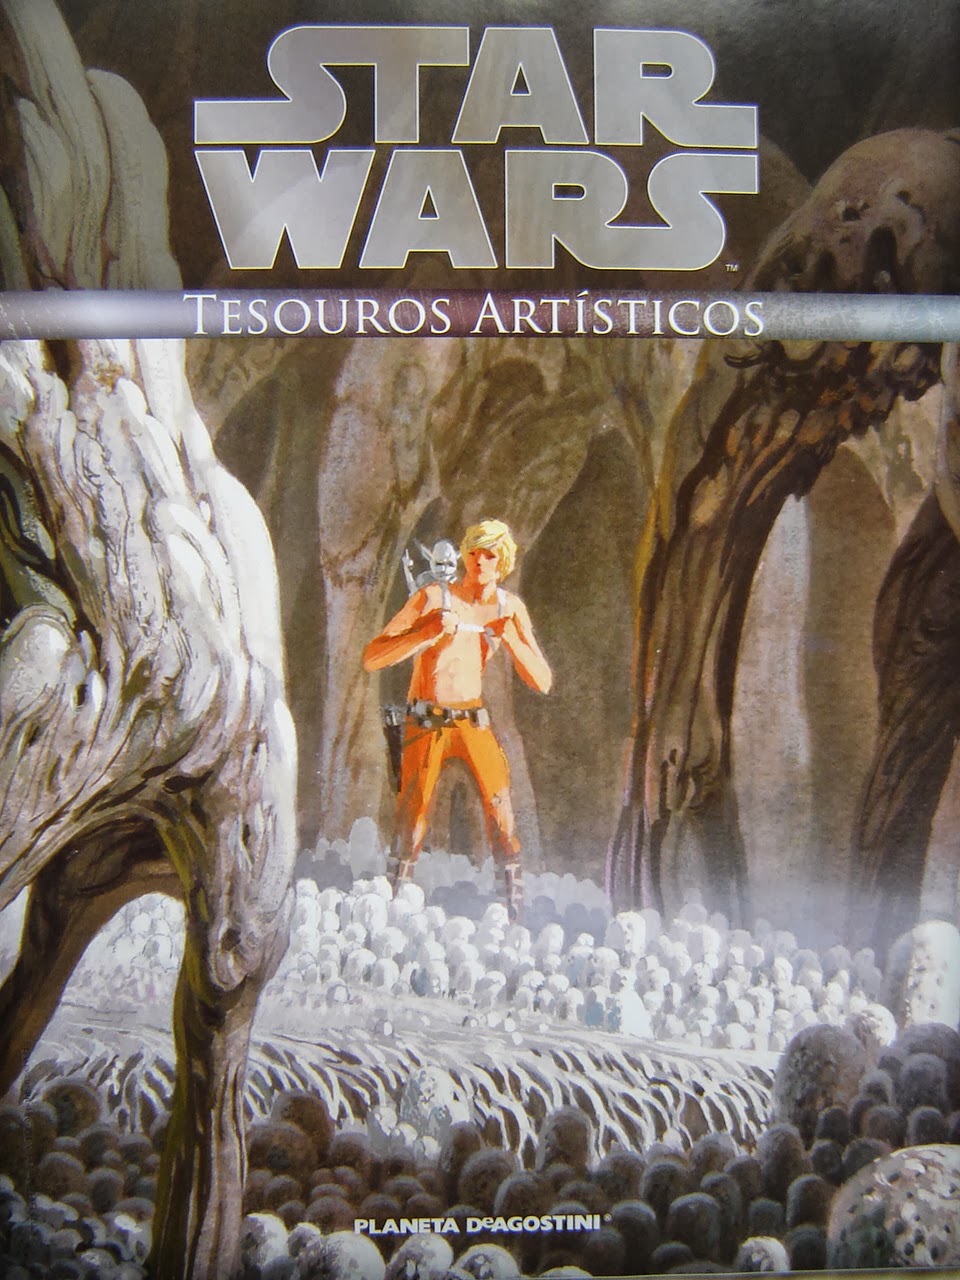 Miniatura - Yoda - Coleção Xadrez Star Wars - Medindo a